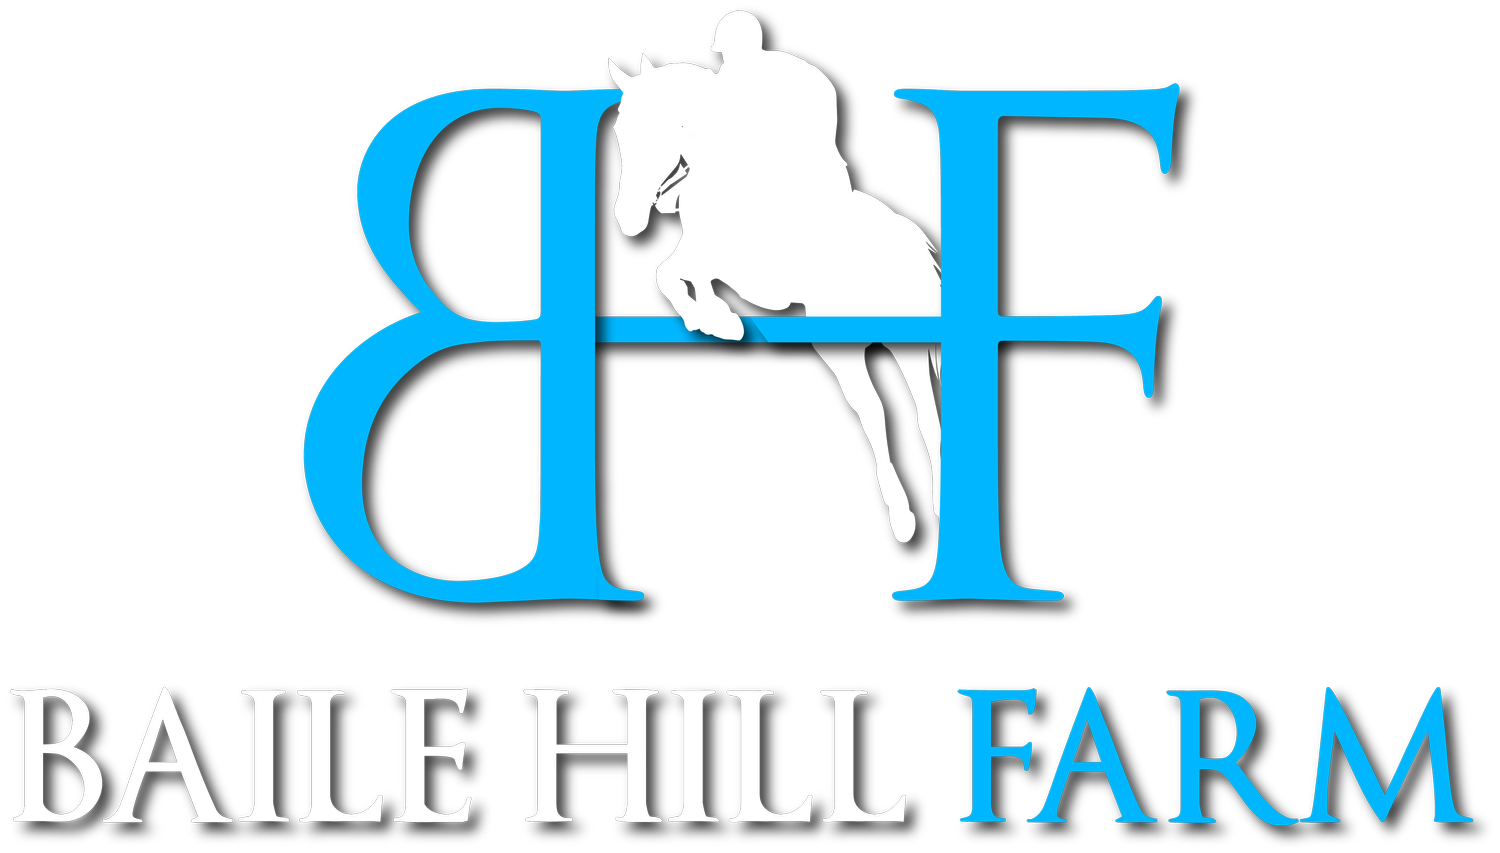 Baile Hill Farm